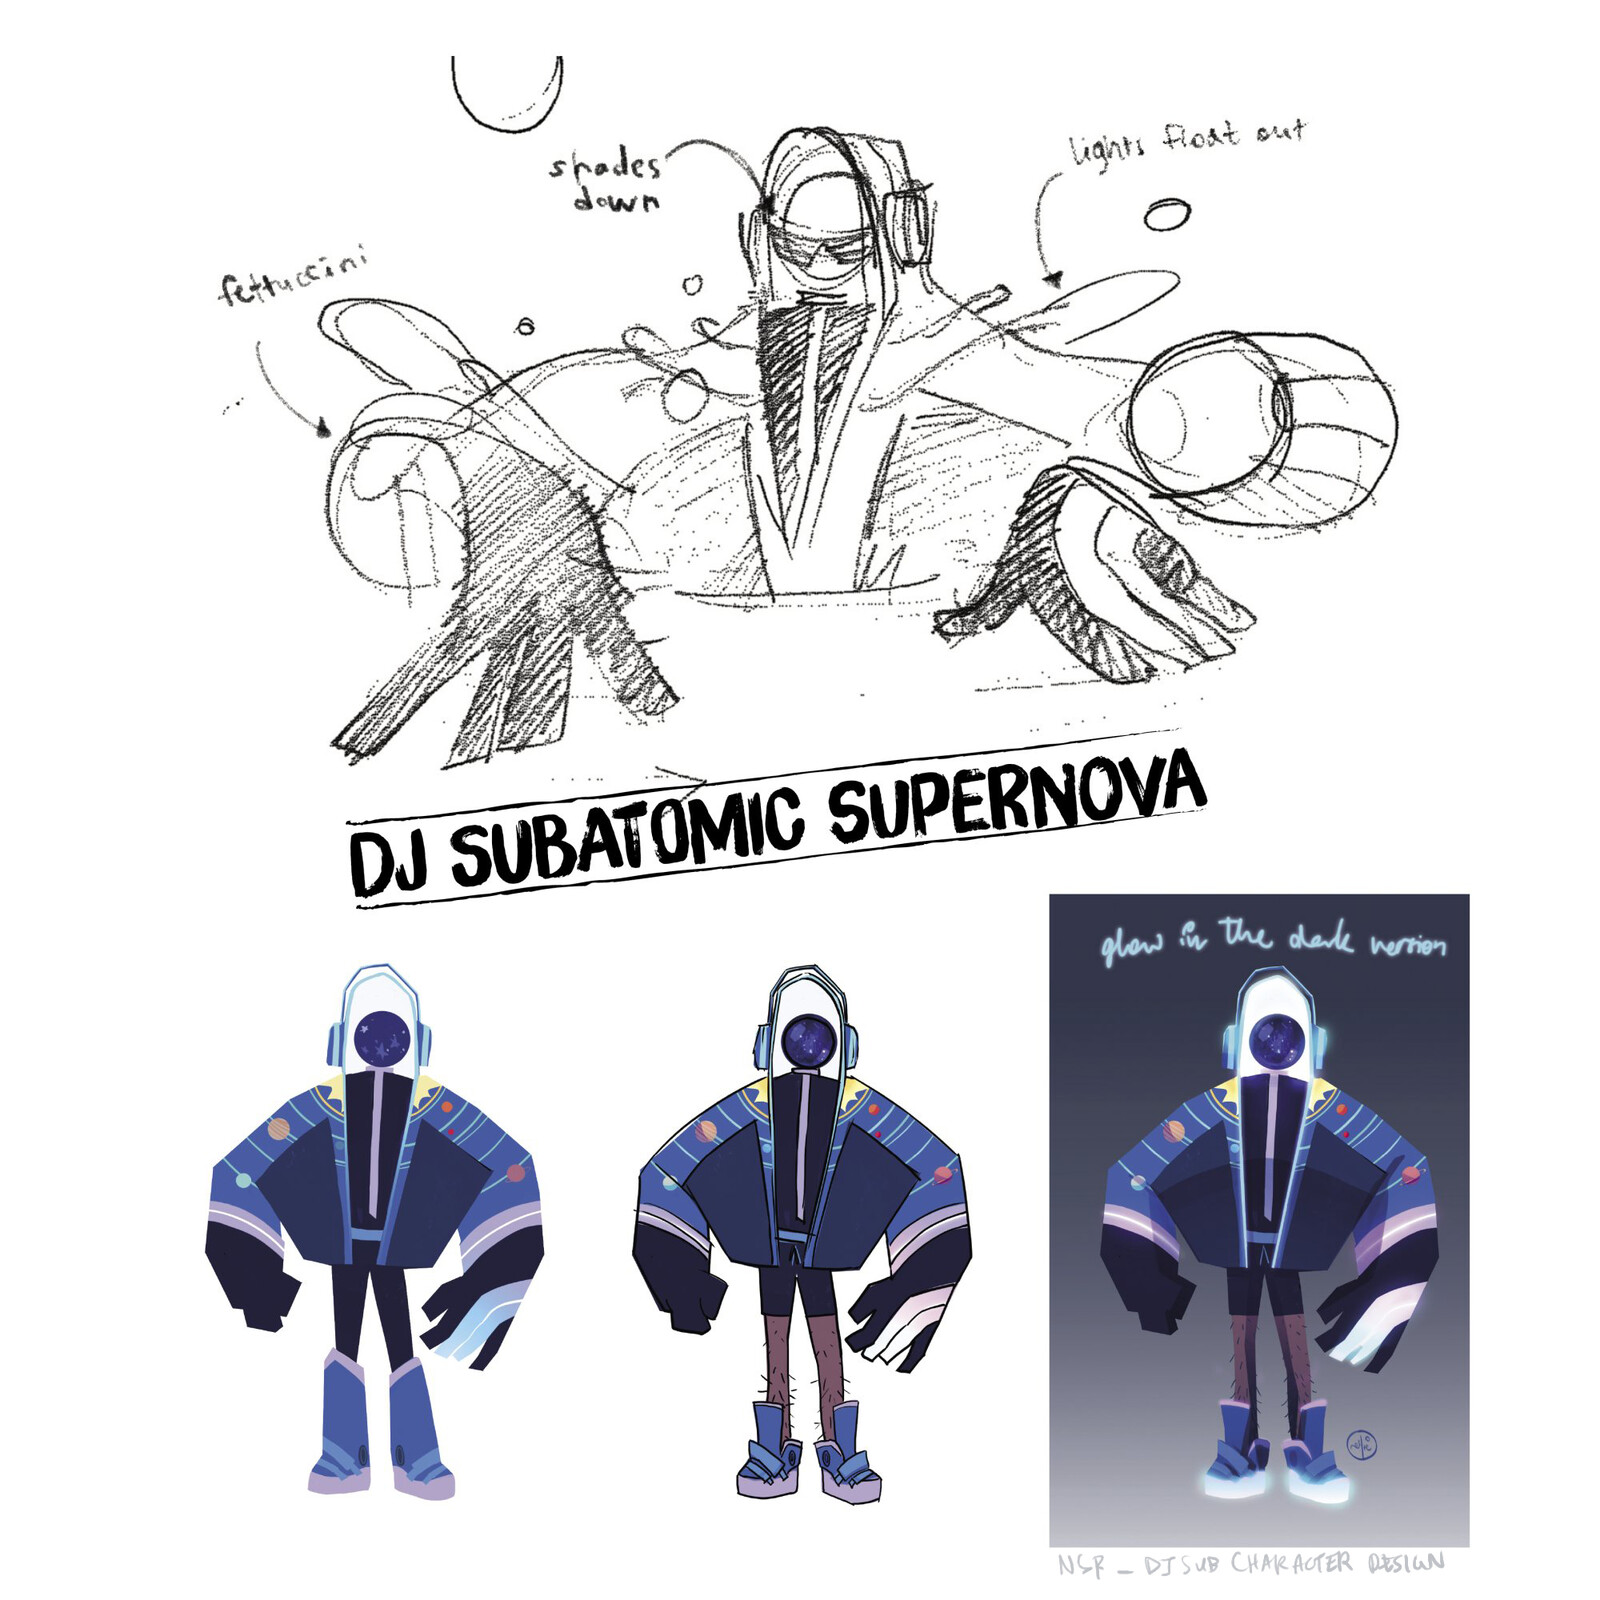 DJ Sub concept art